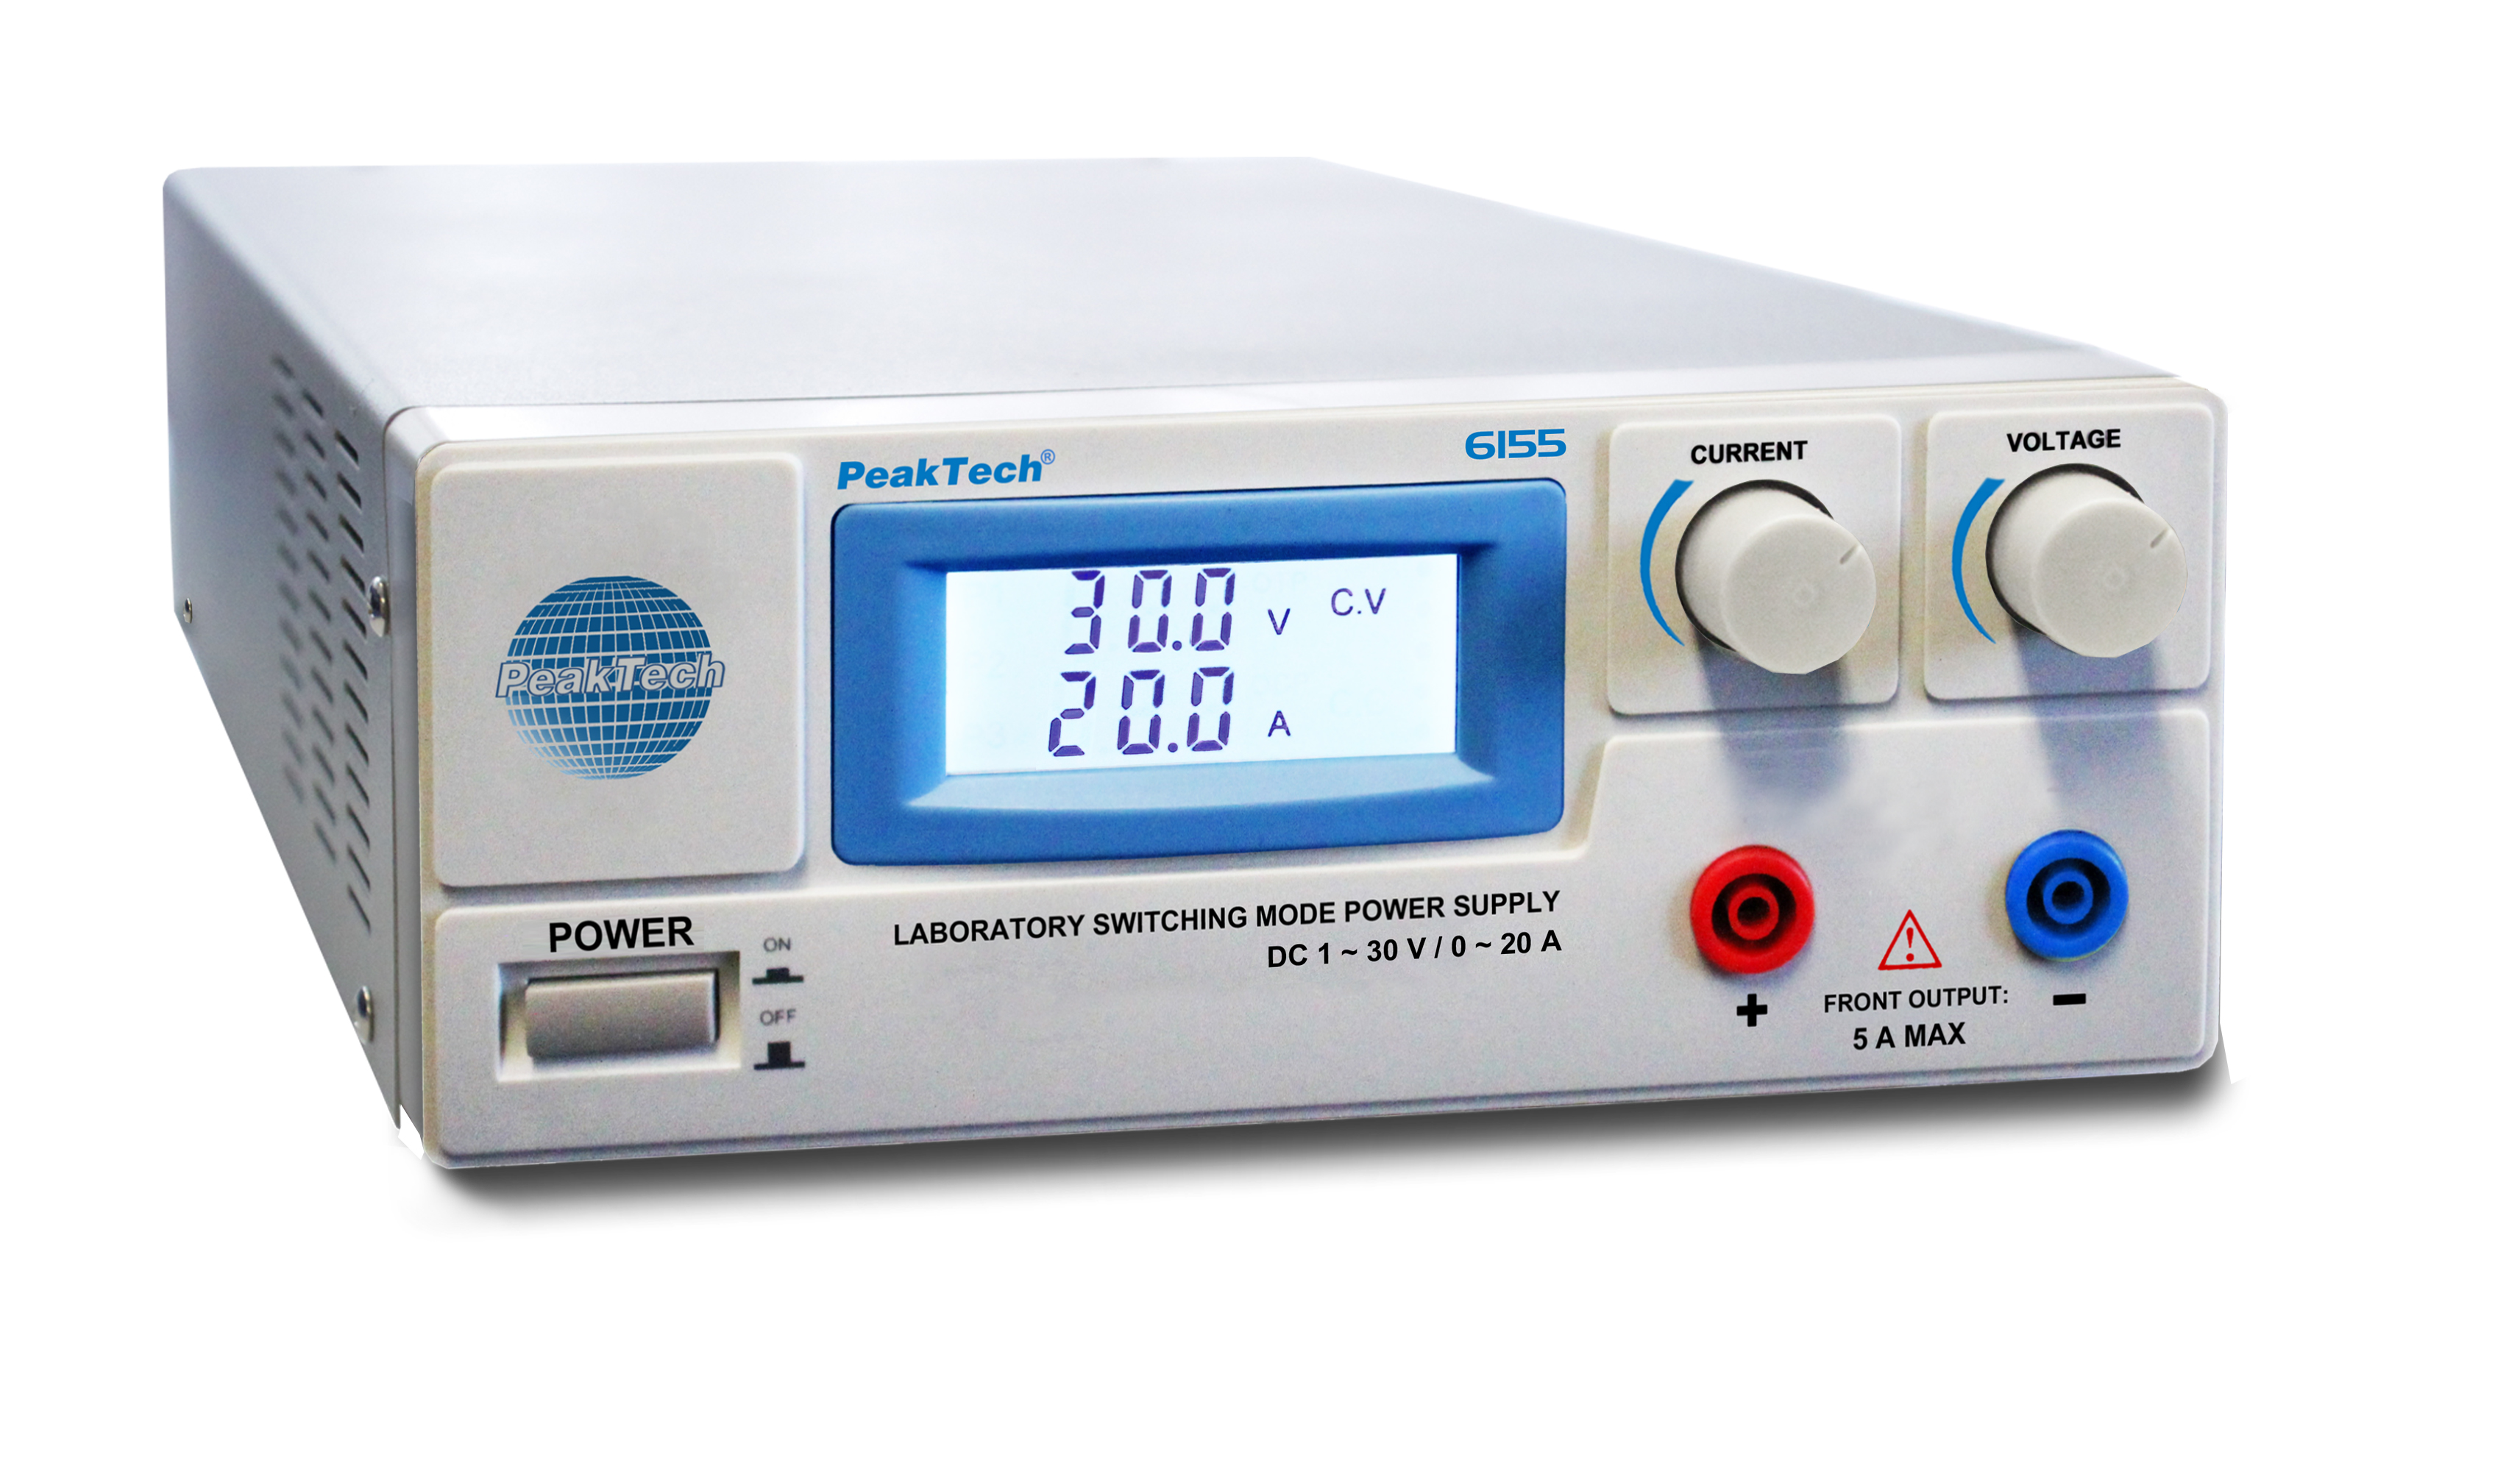 «PeakTech® P 6155» Laboratory Switching Mode Power Supply